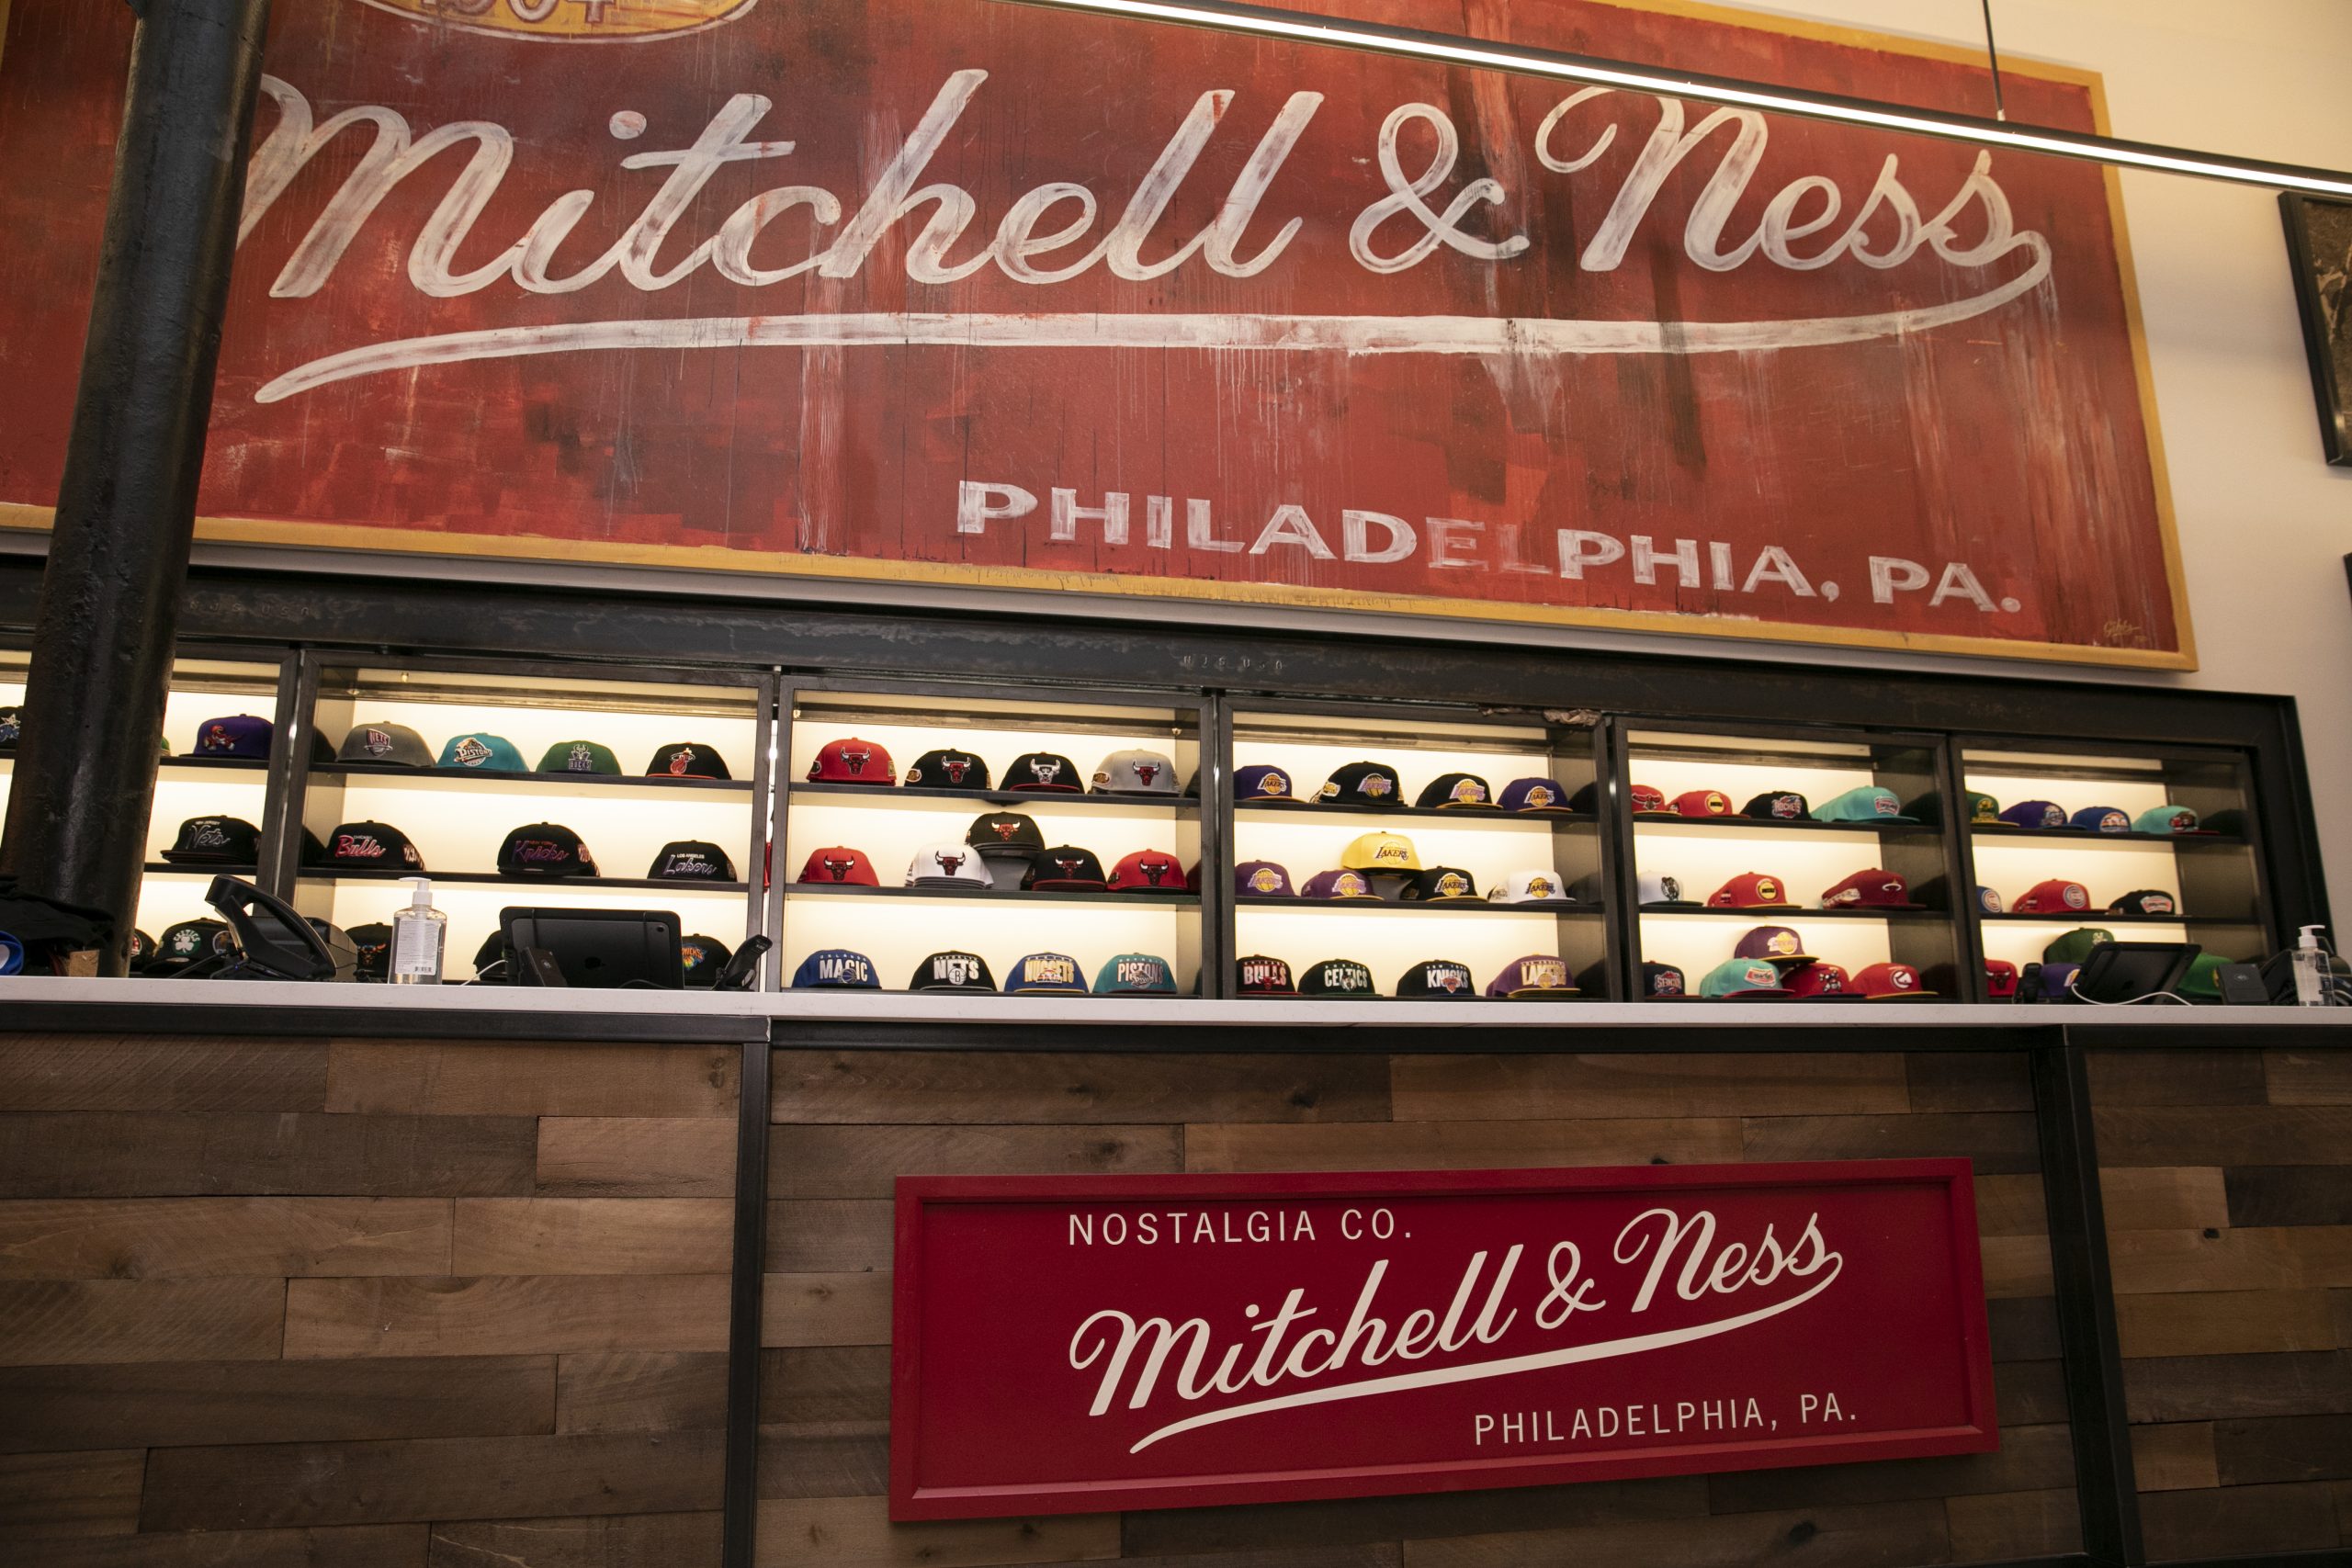 NOSTALGIA CO. MITCHELL & NESS PHILADELPHIA, PA. U.S.A. Trademark